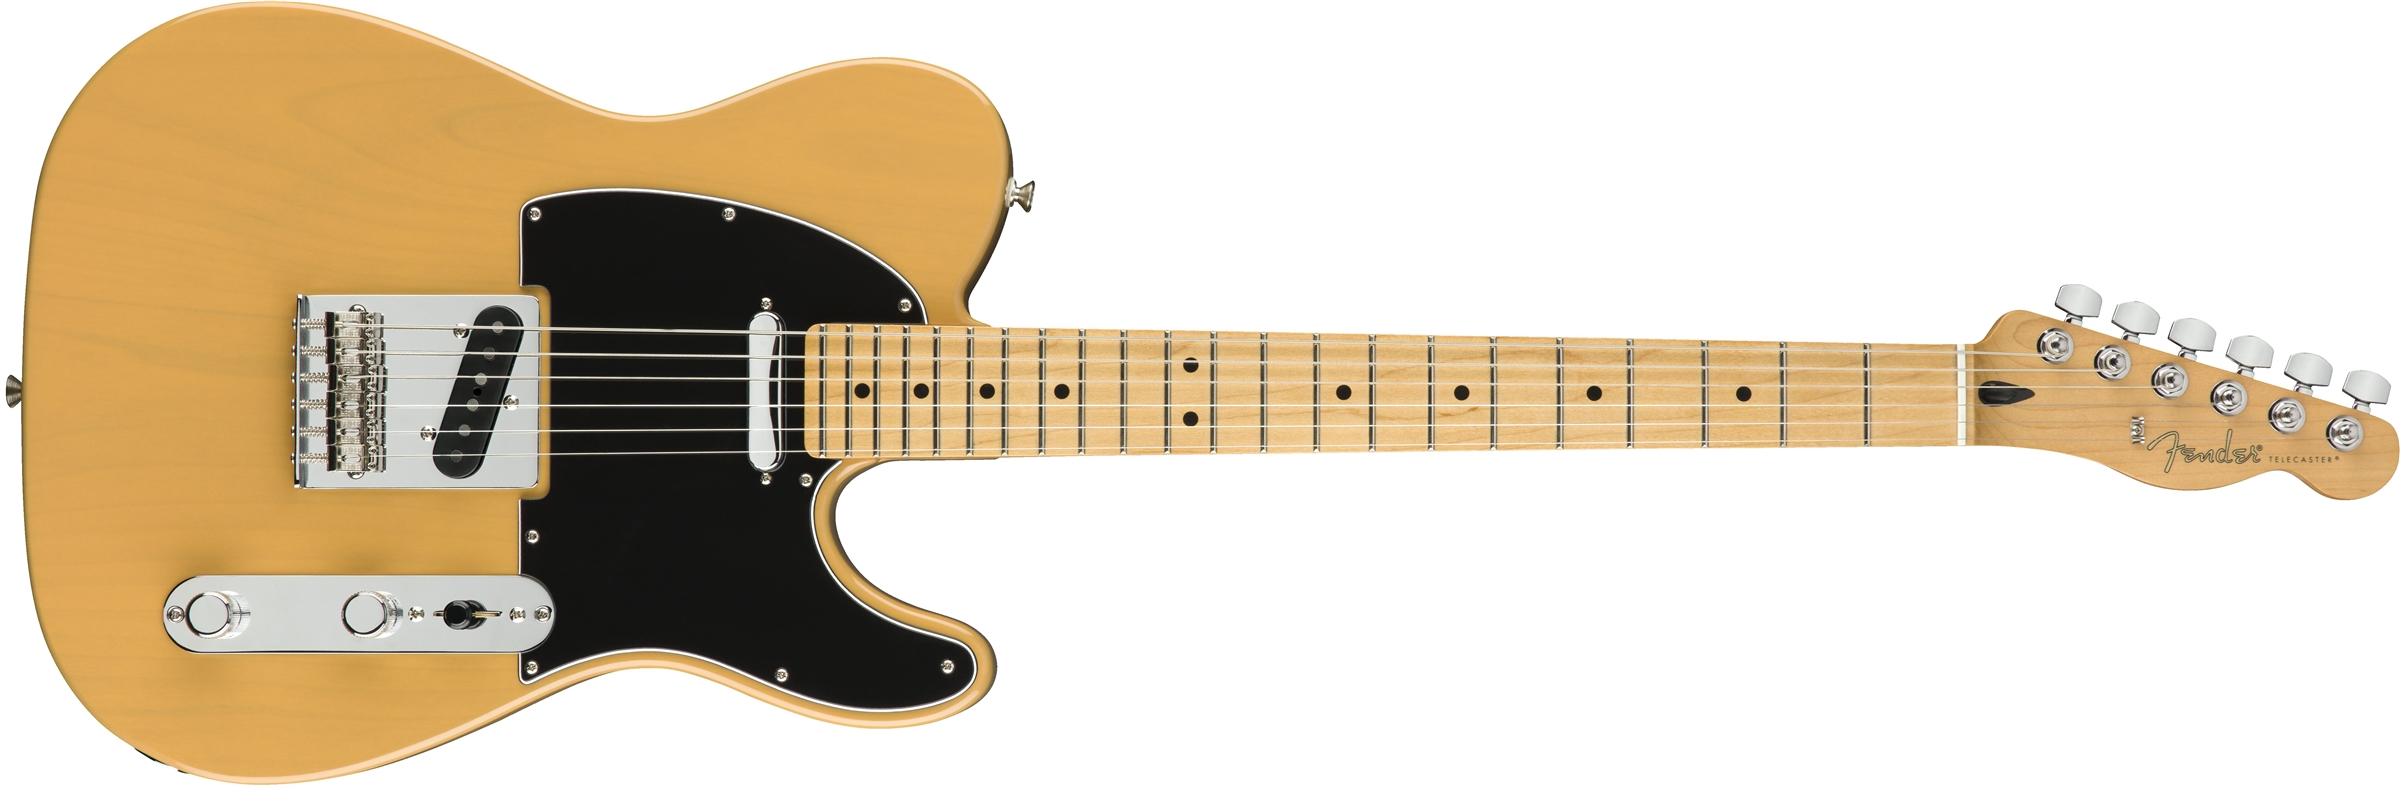 Fender Tele Player Mex Mn - Butterscotch Blonde - Tel shape electric guitar - Variation 1